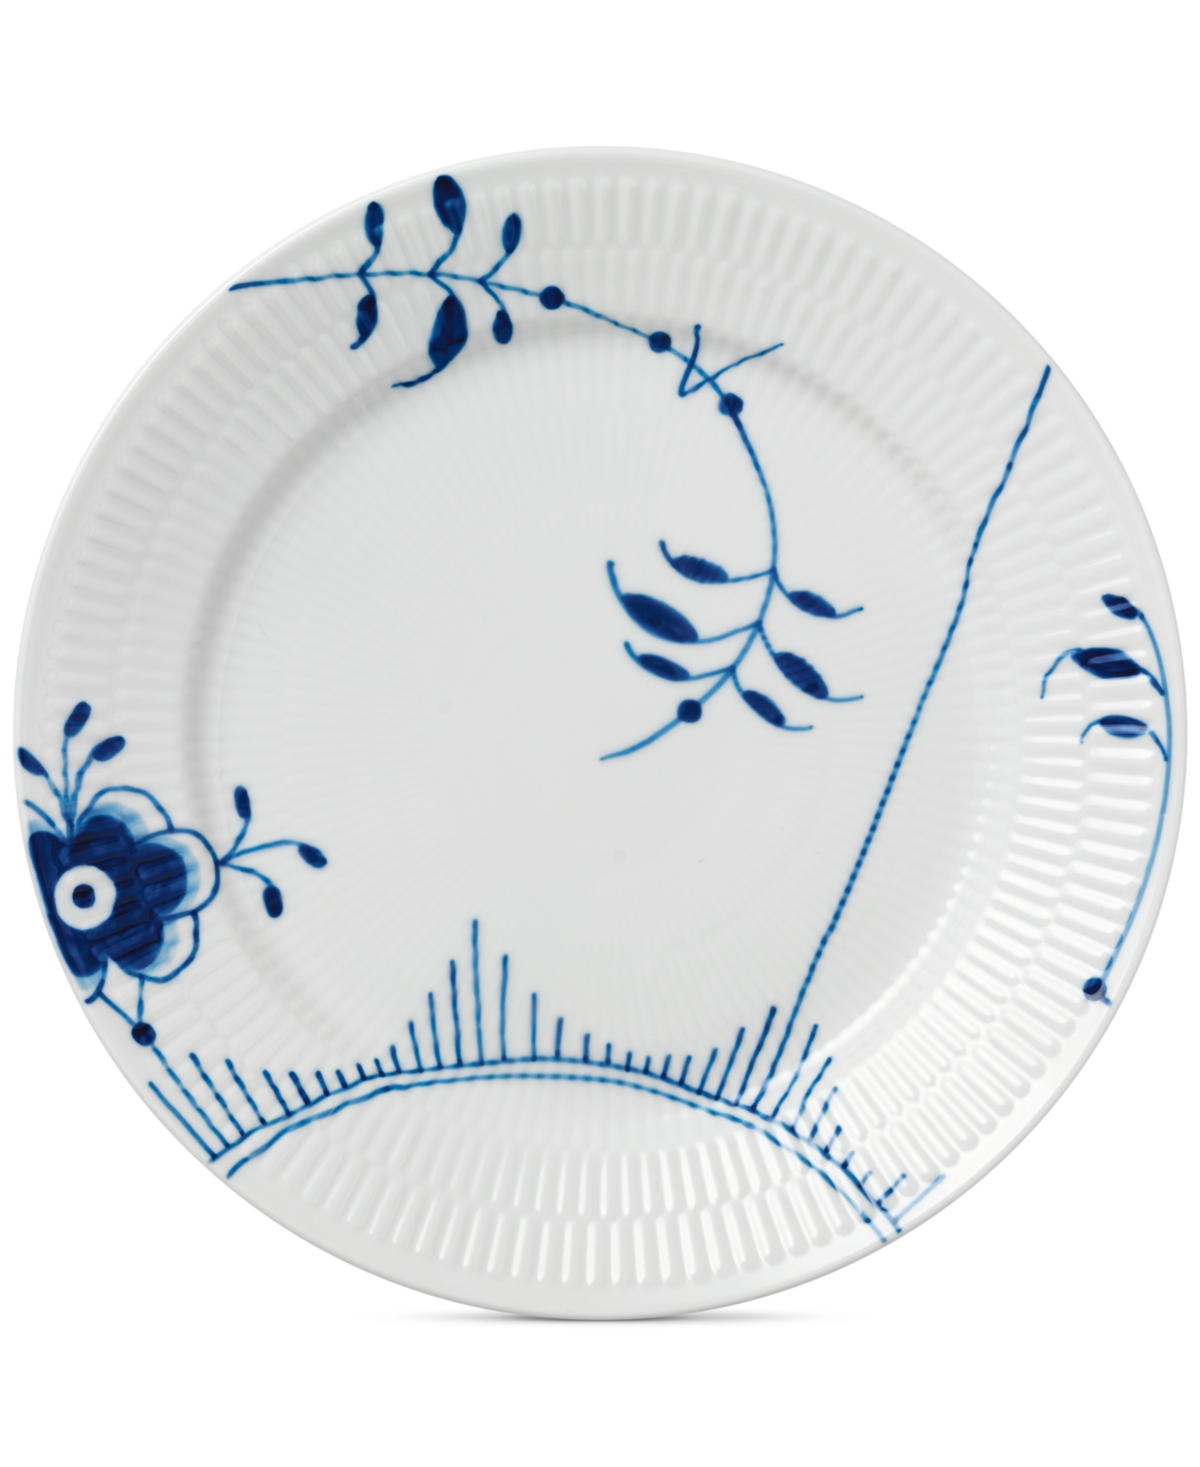 Blue Fluted Mega Dinner Plate #2 - Multi